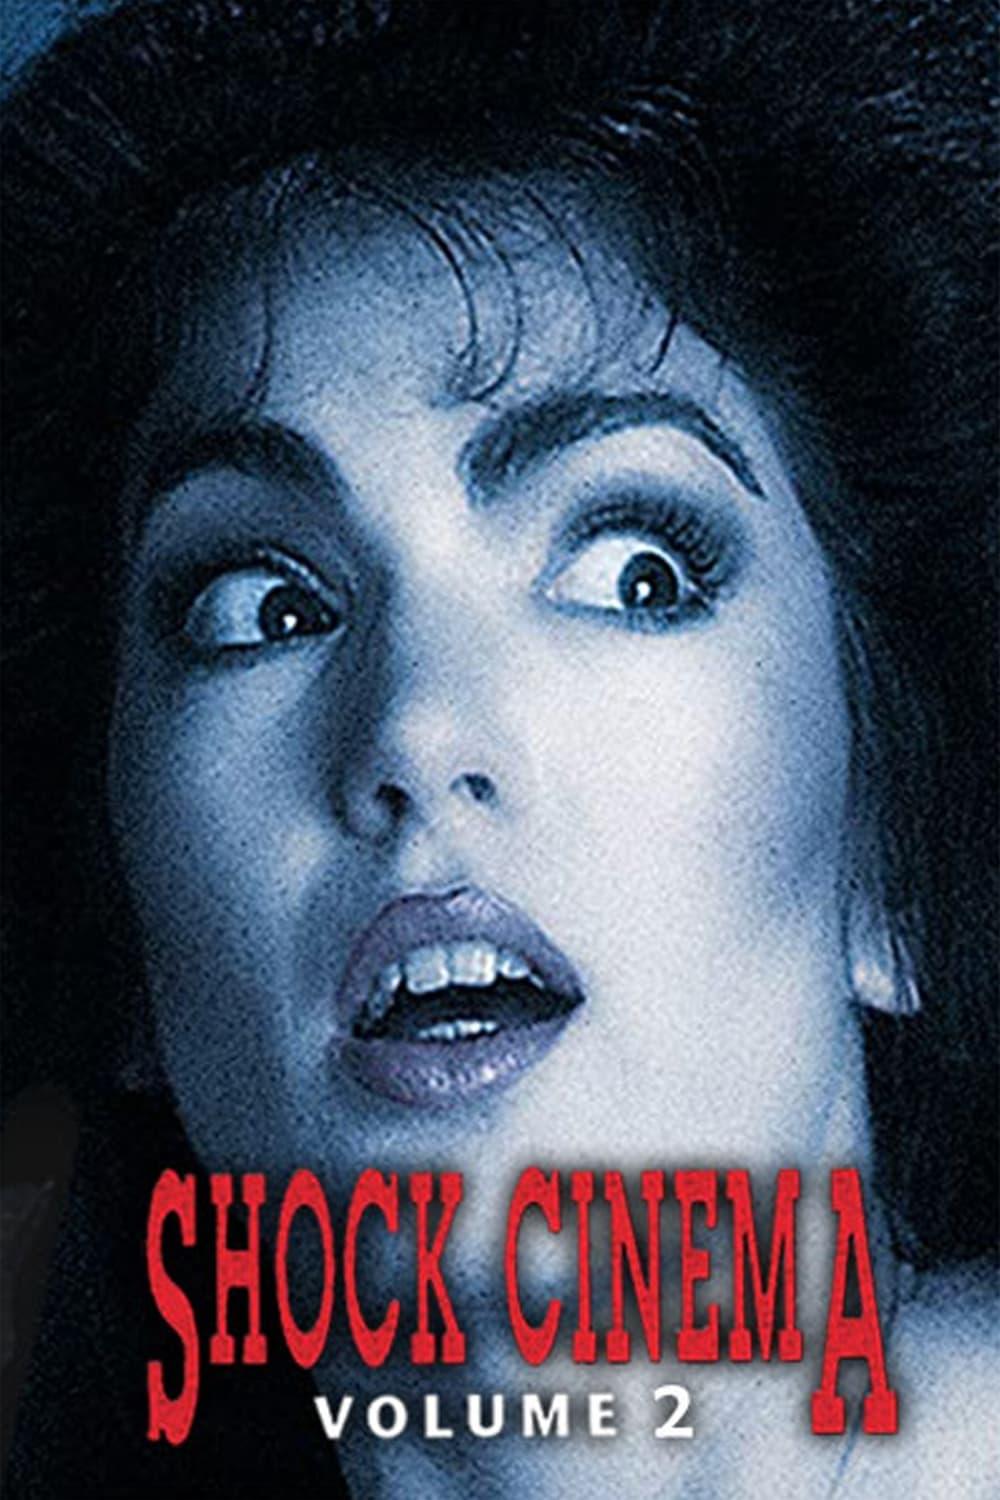 Shock Cinema: Volume Two poster